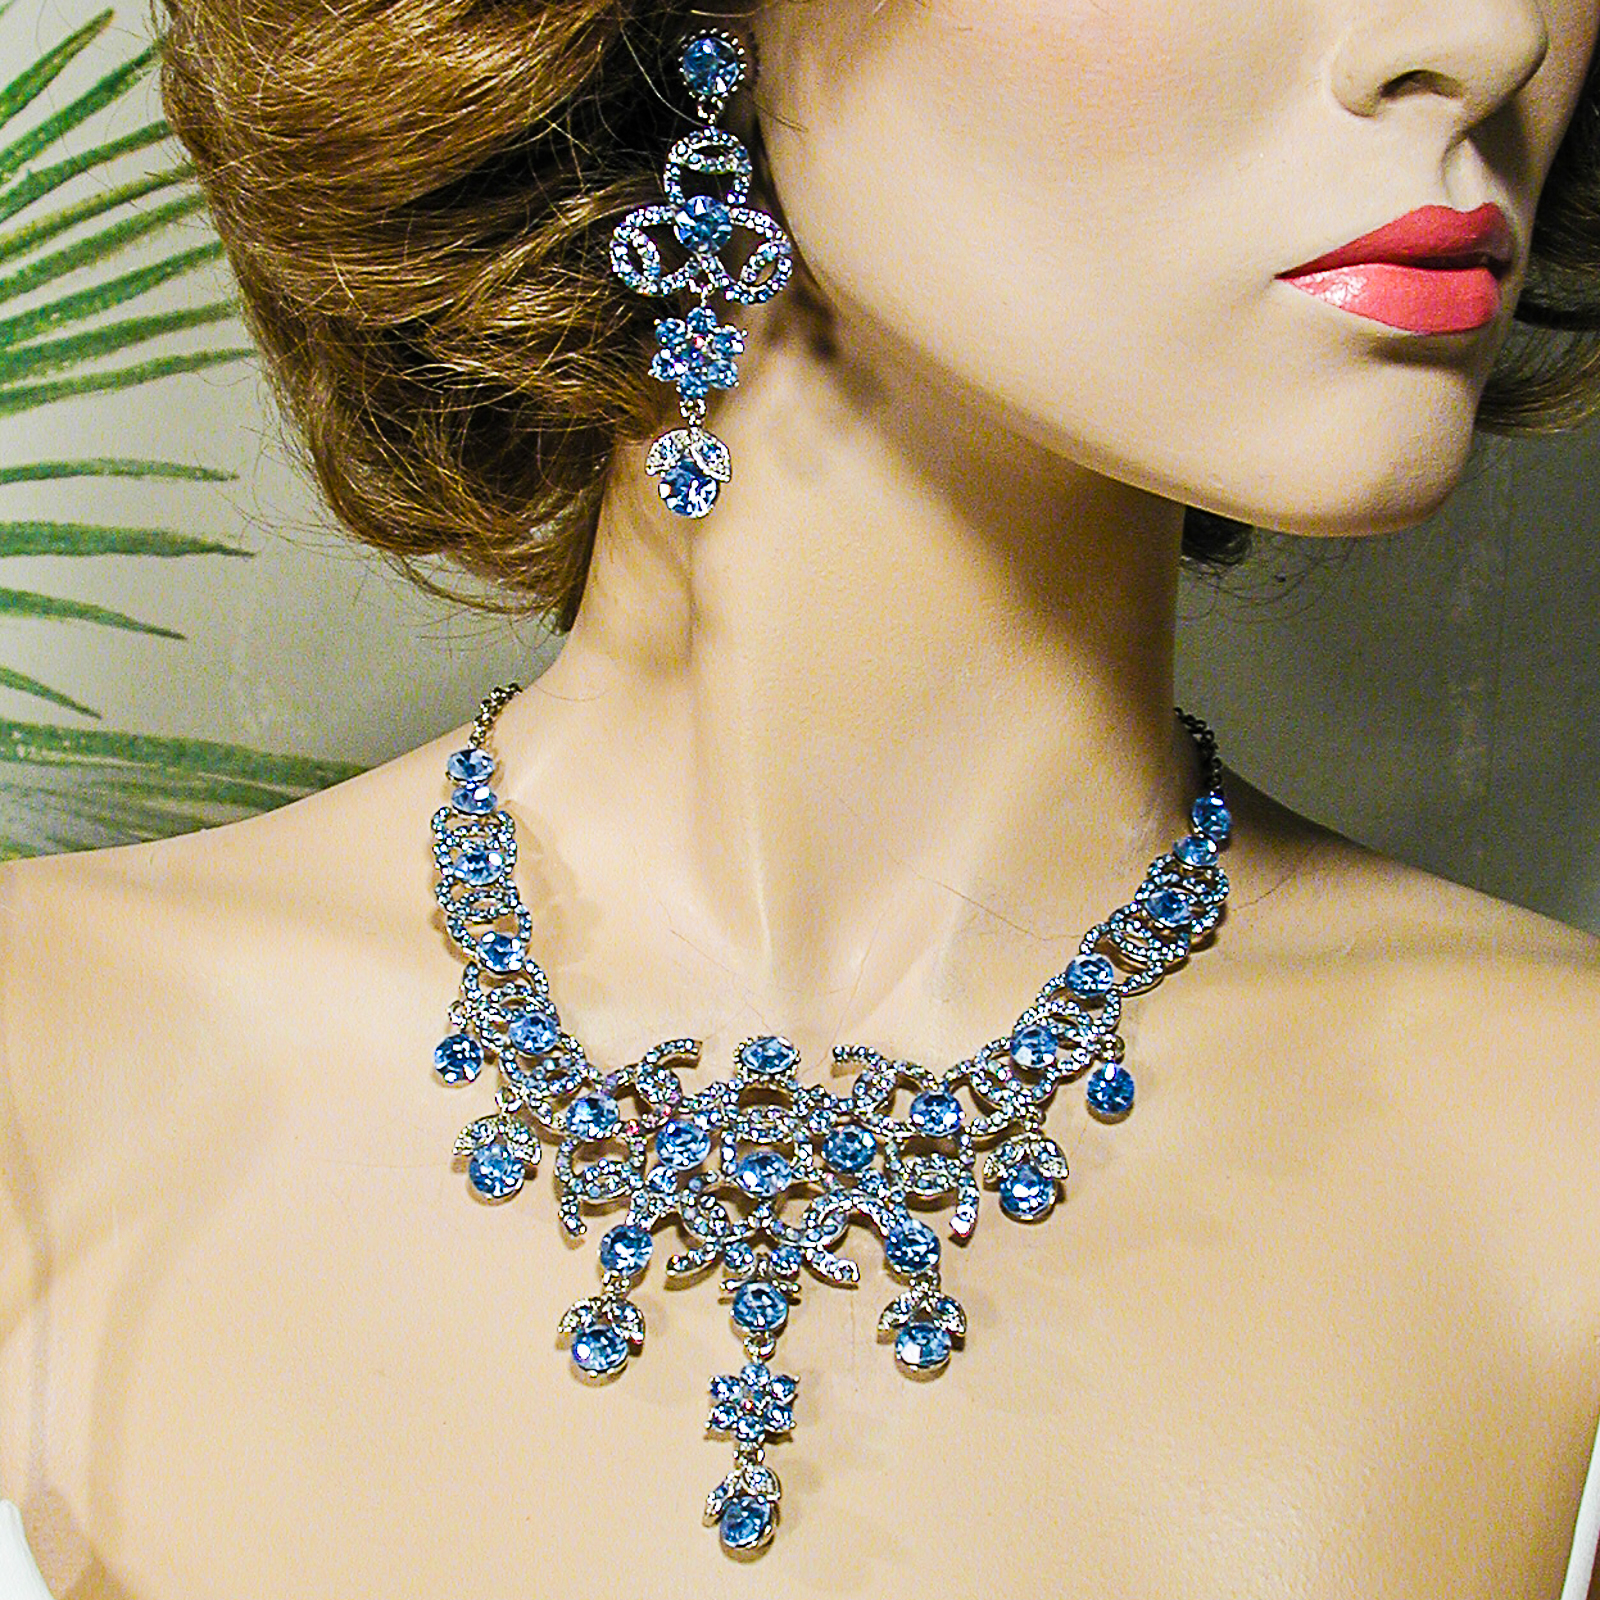 Large Statement Crystal Rhinestone Fringe Bib Necklace Earrings Set, a fashion accessorie - Evening Elegance